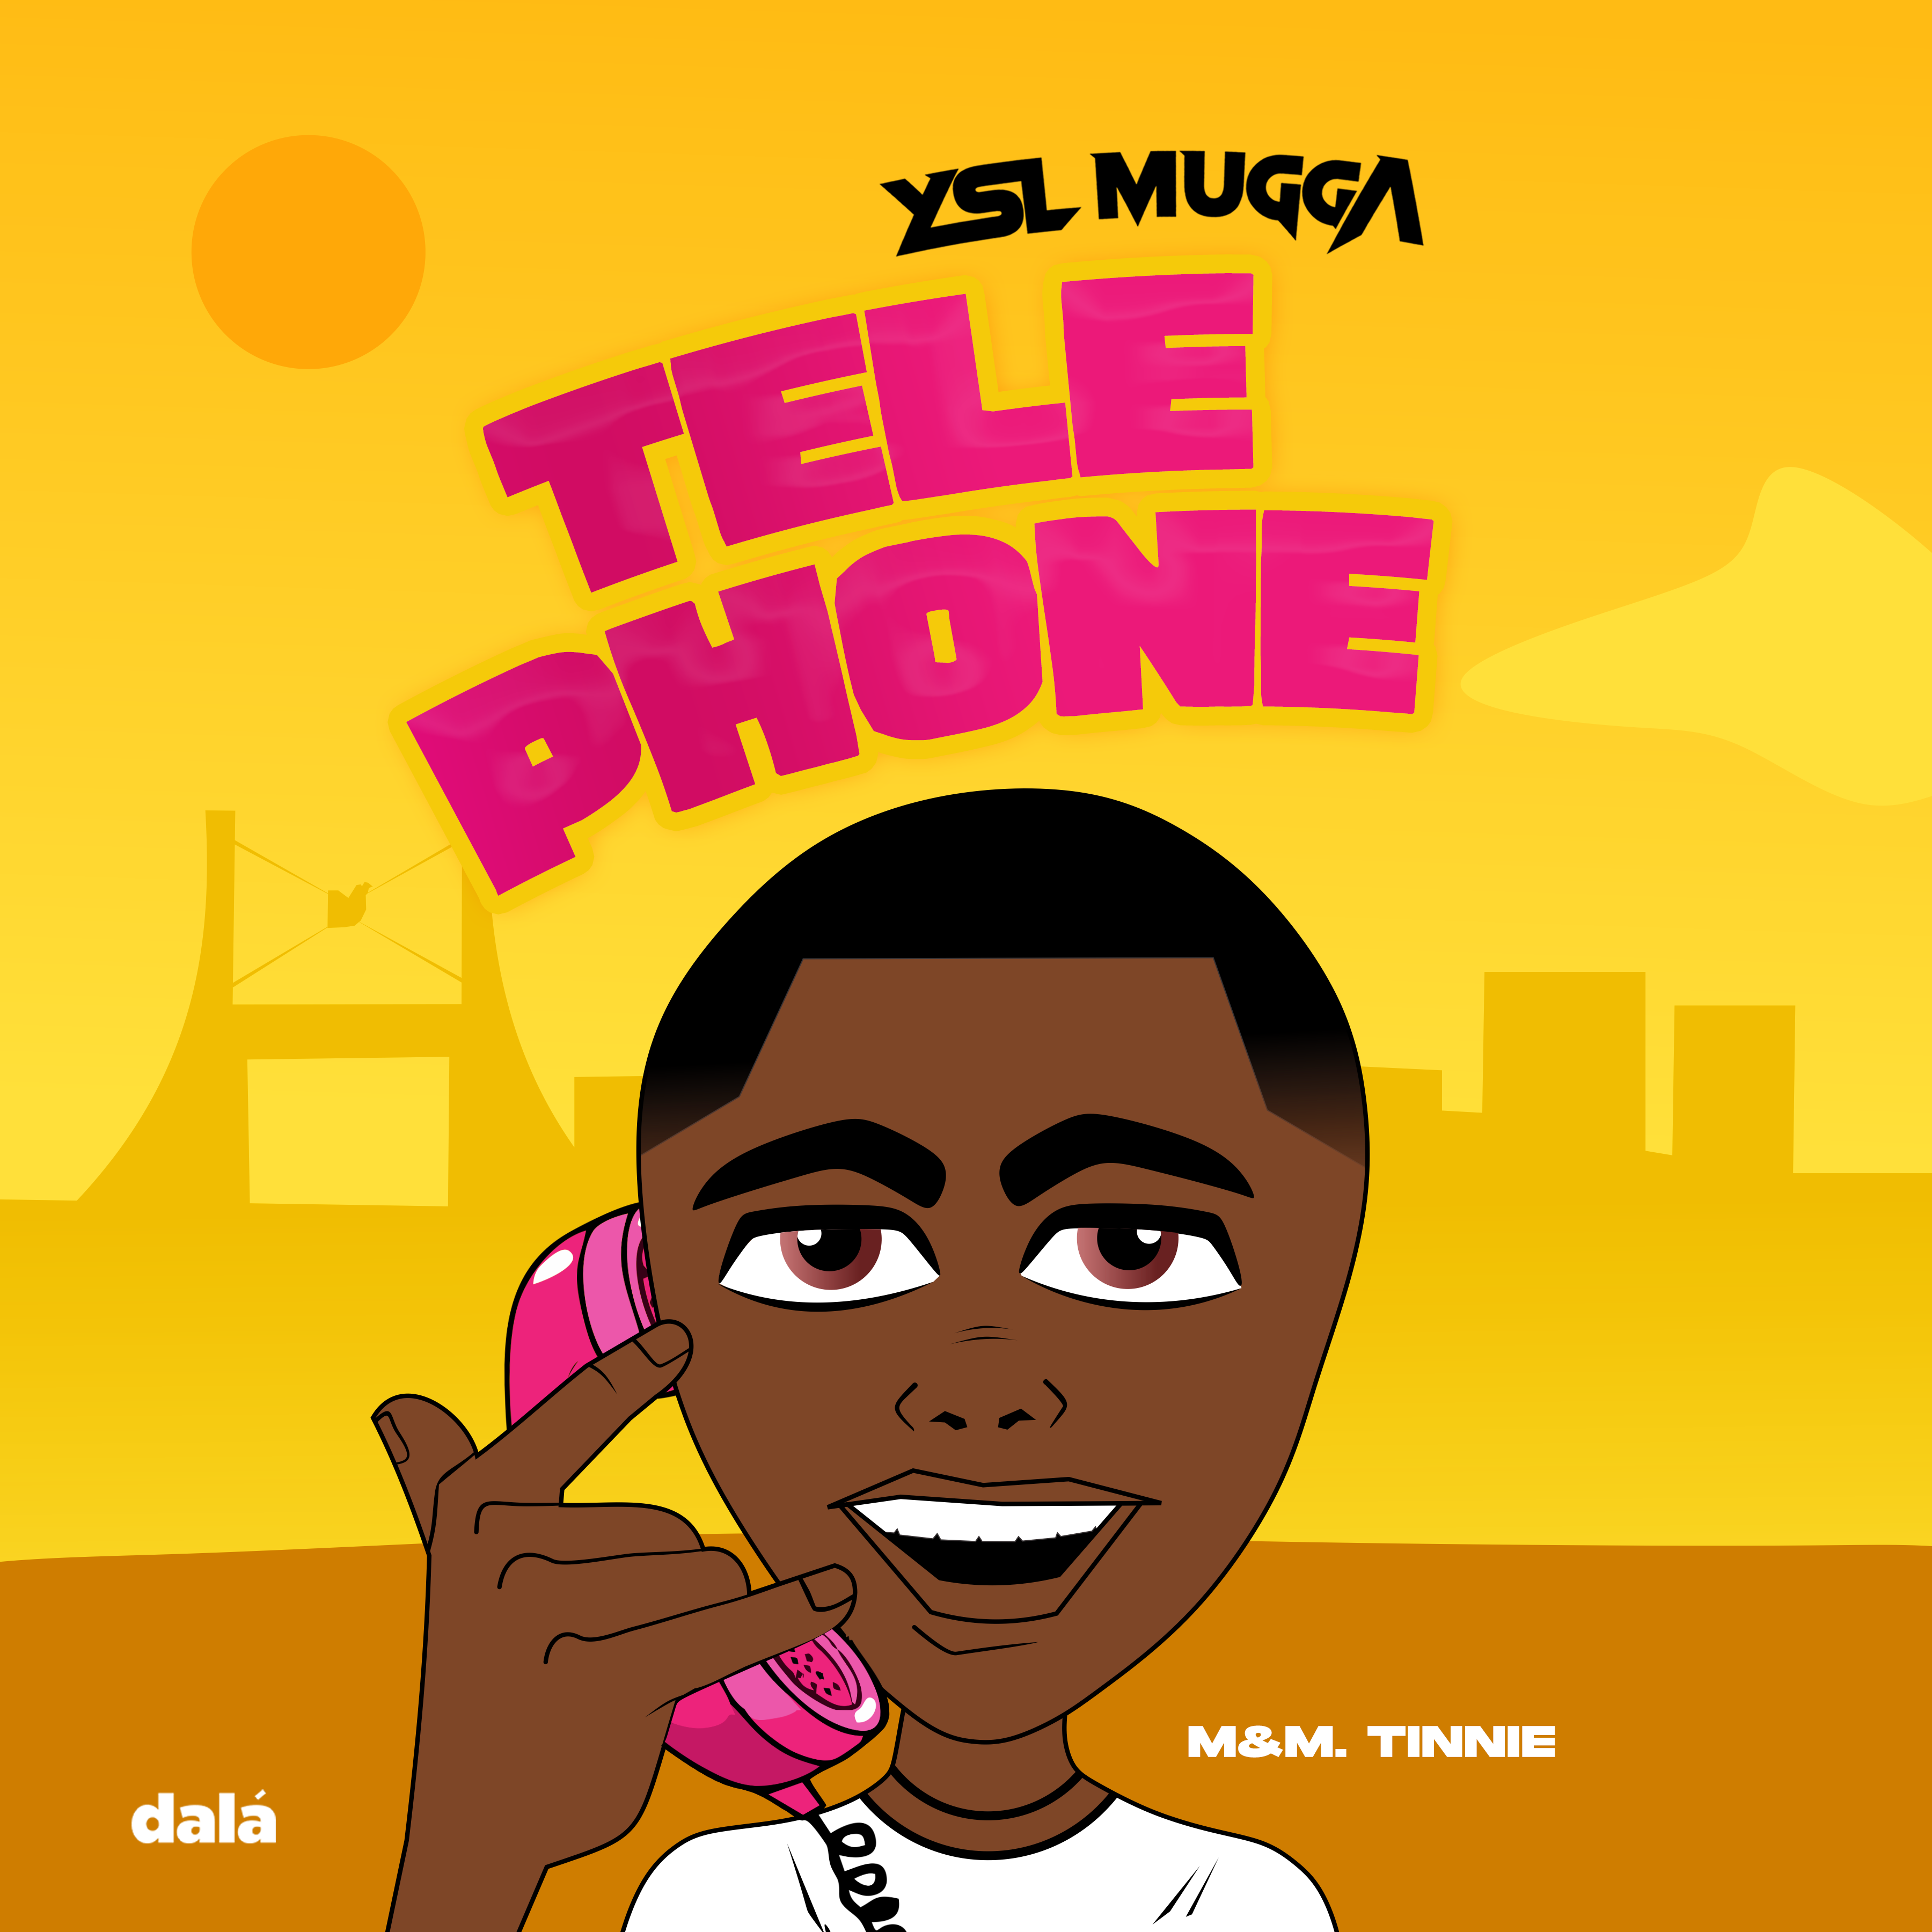 Telephone – Ysl Mugga